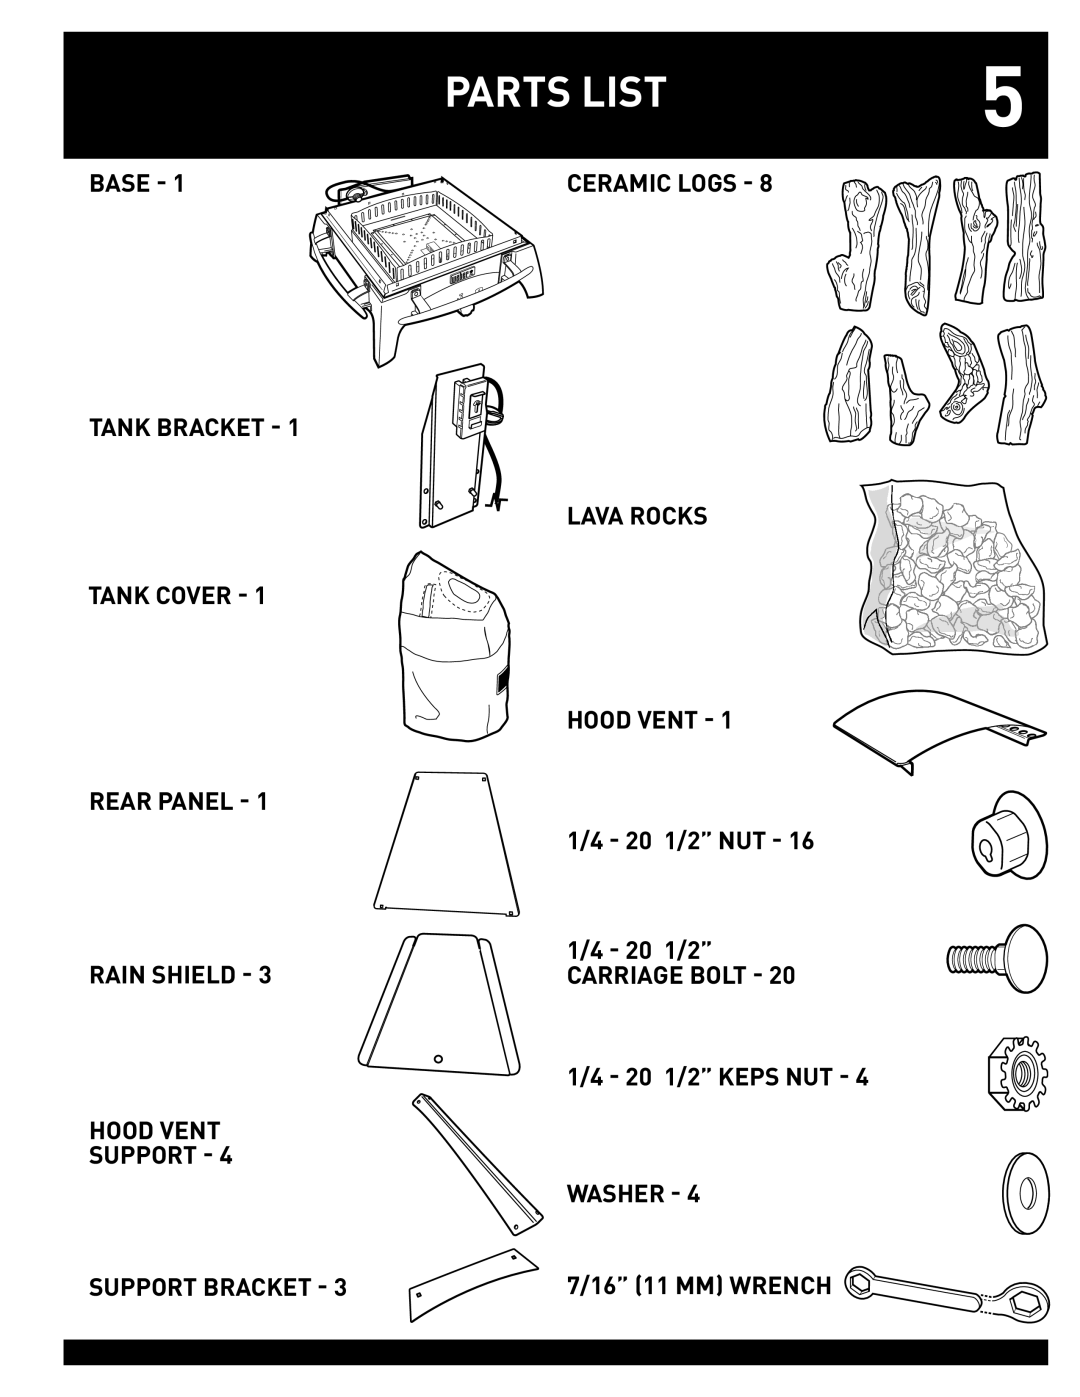 Weber #43028 manual Parts List, Base, Ceramic Logs, Tank Bracket - Lava Rocks Tank Cover, Washer, Support Bracket 